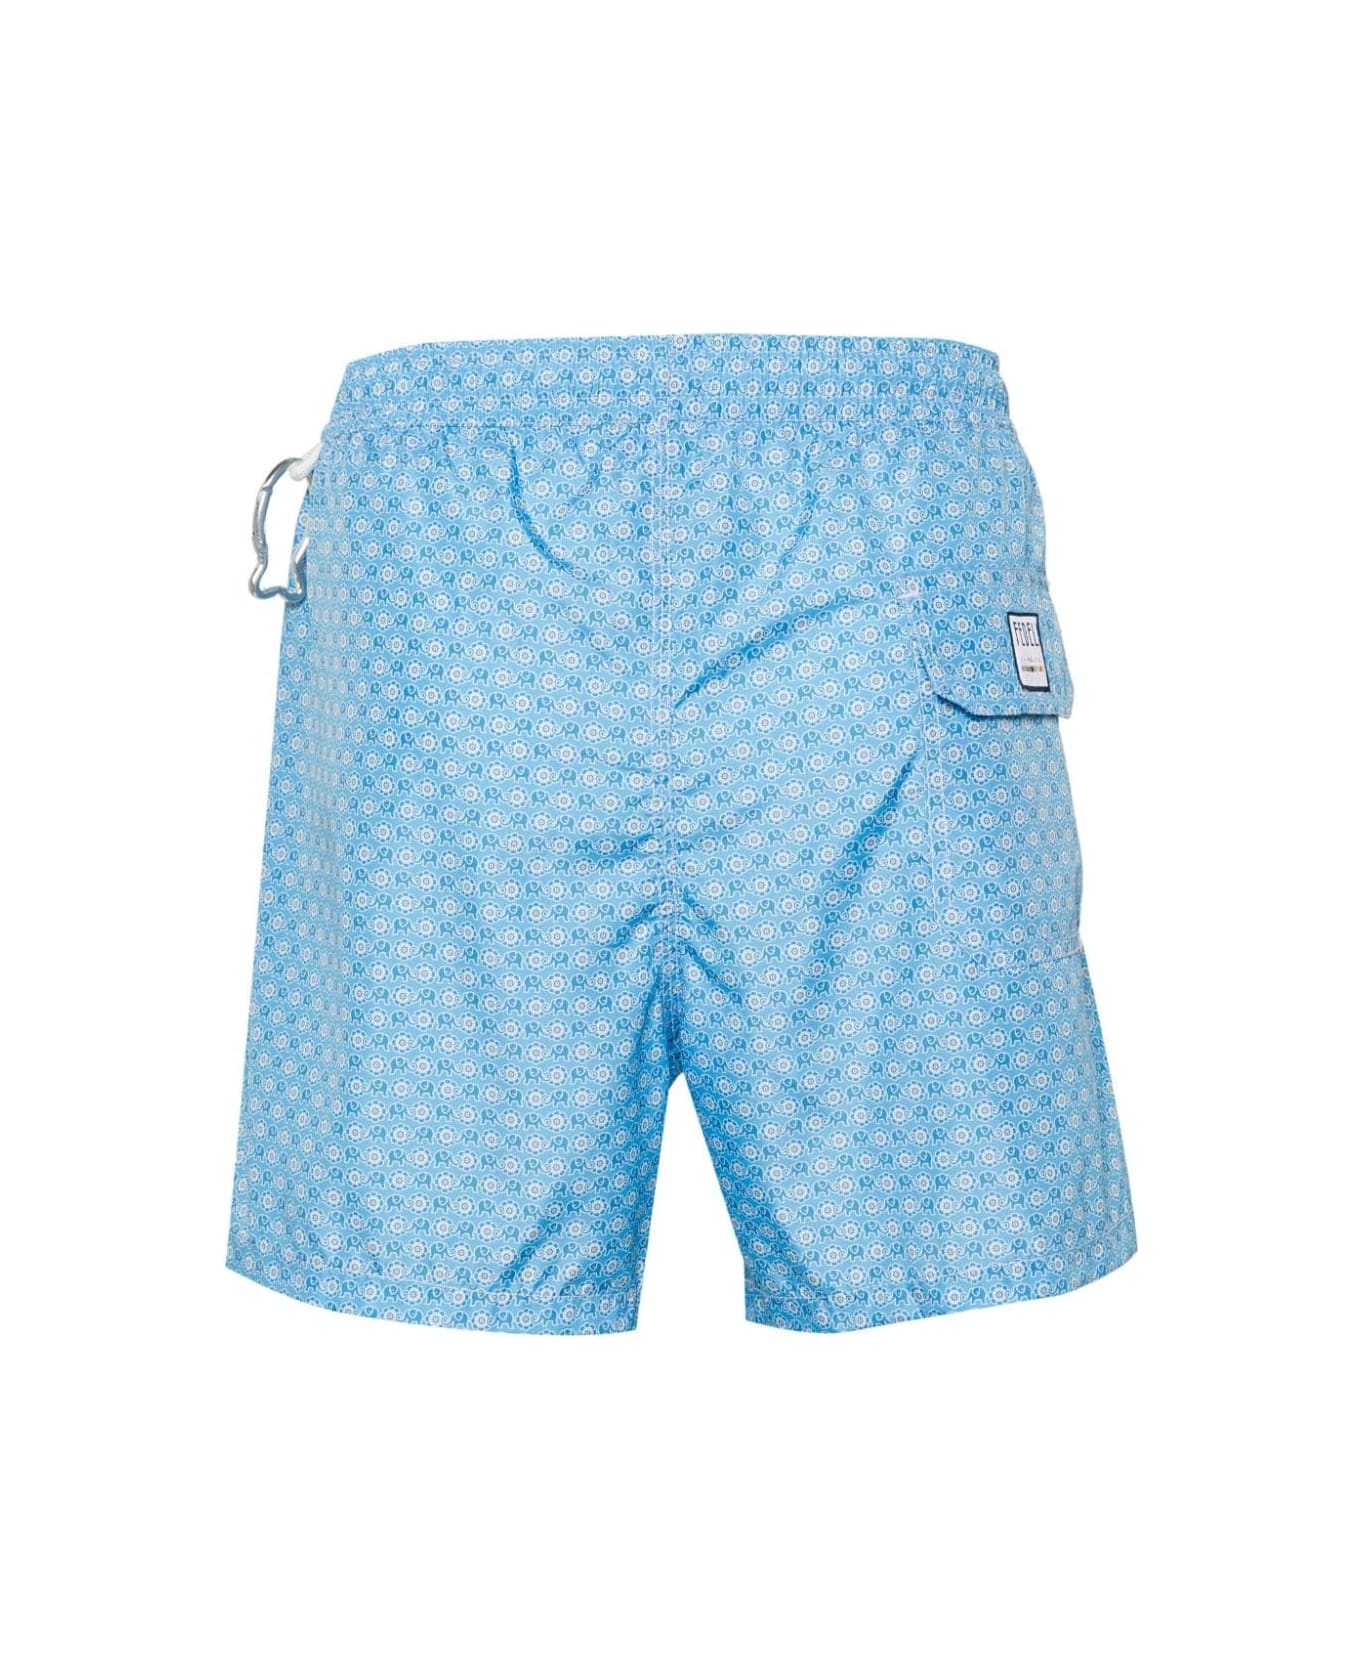 Fedeli Light Blue Swim Shorts With Elephants And Flowers Pattern - Blue